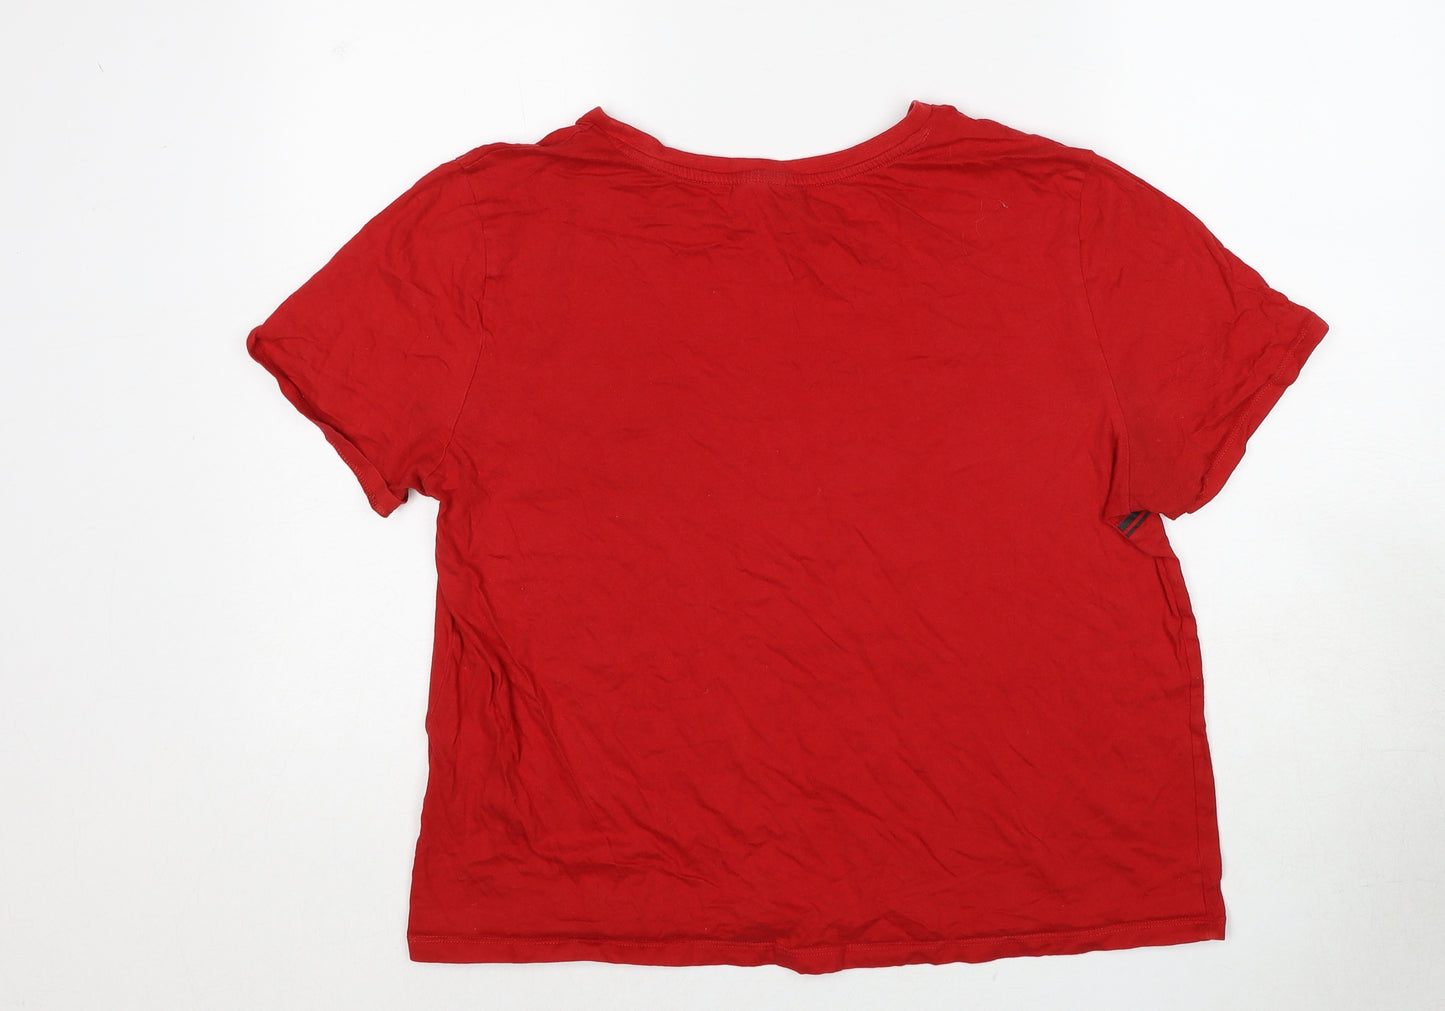 H&M Womens Red Cotton Basic T-Shirt Size L Round Neck - U.S.A